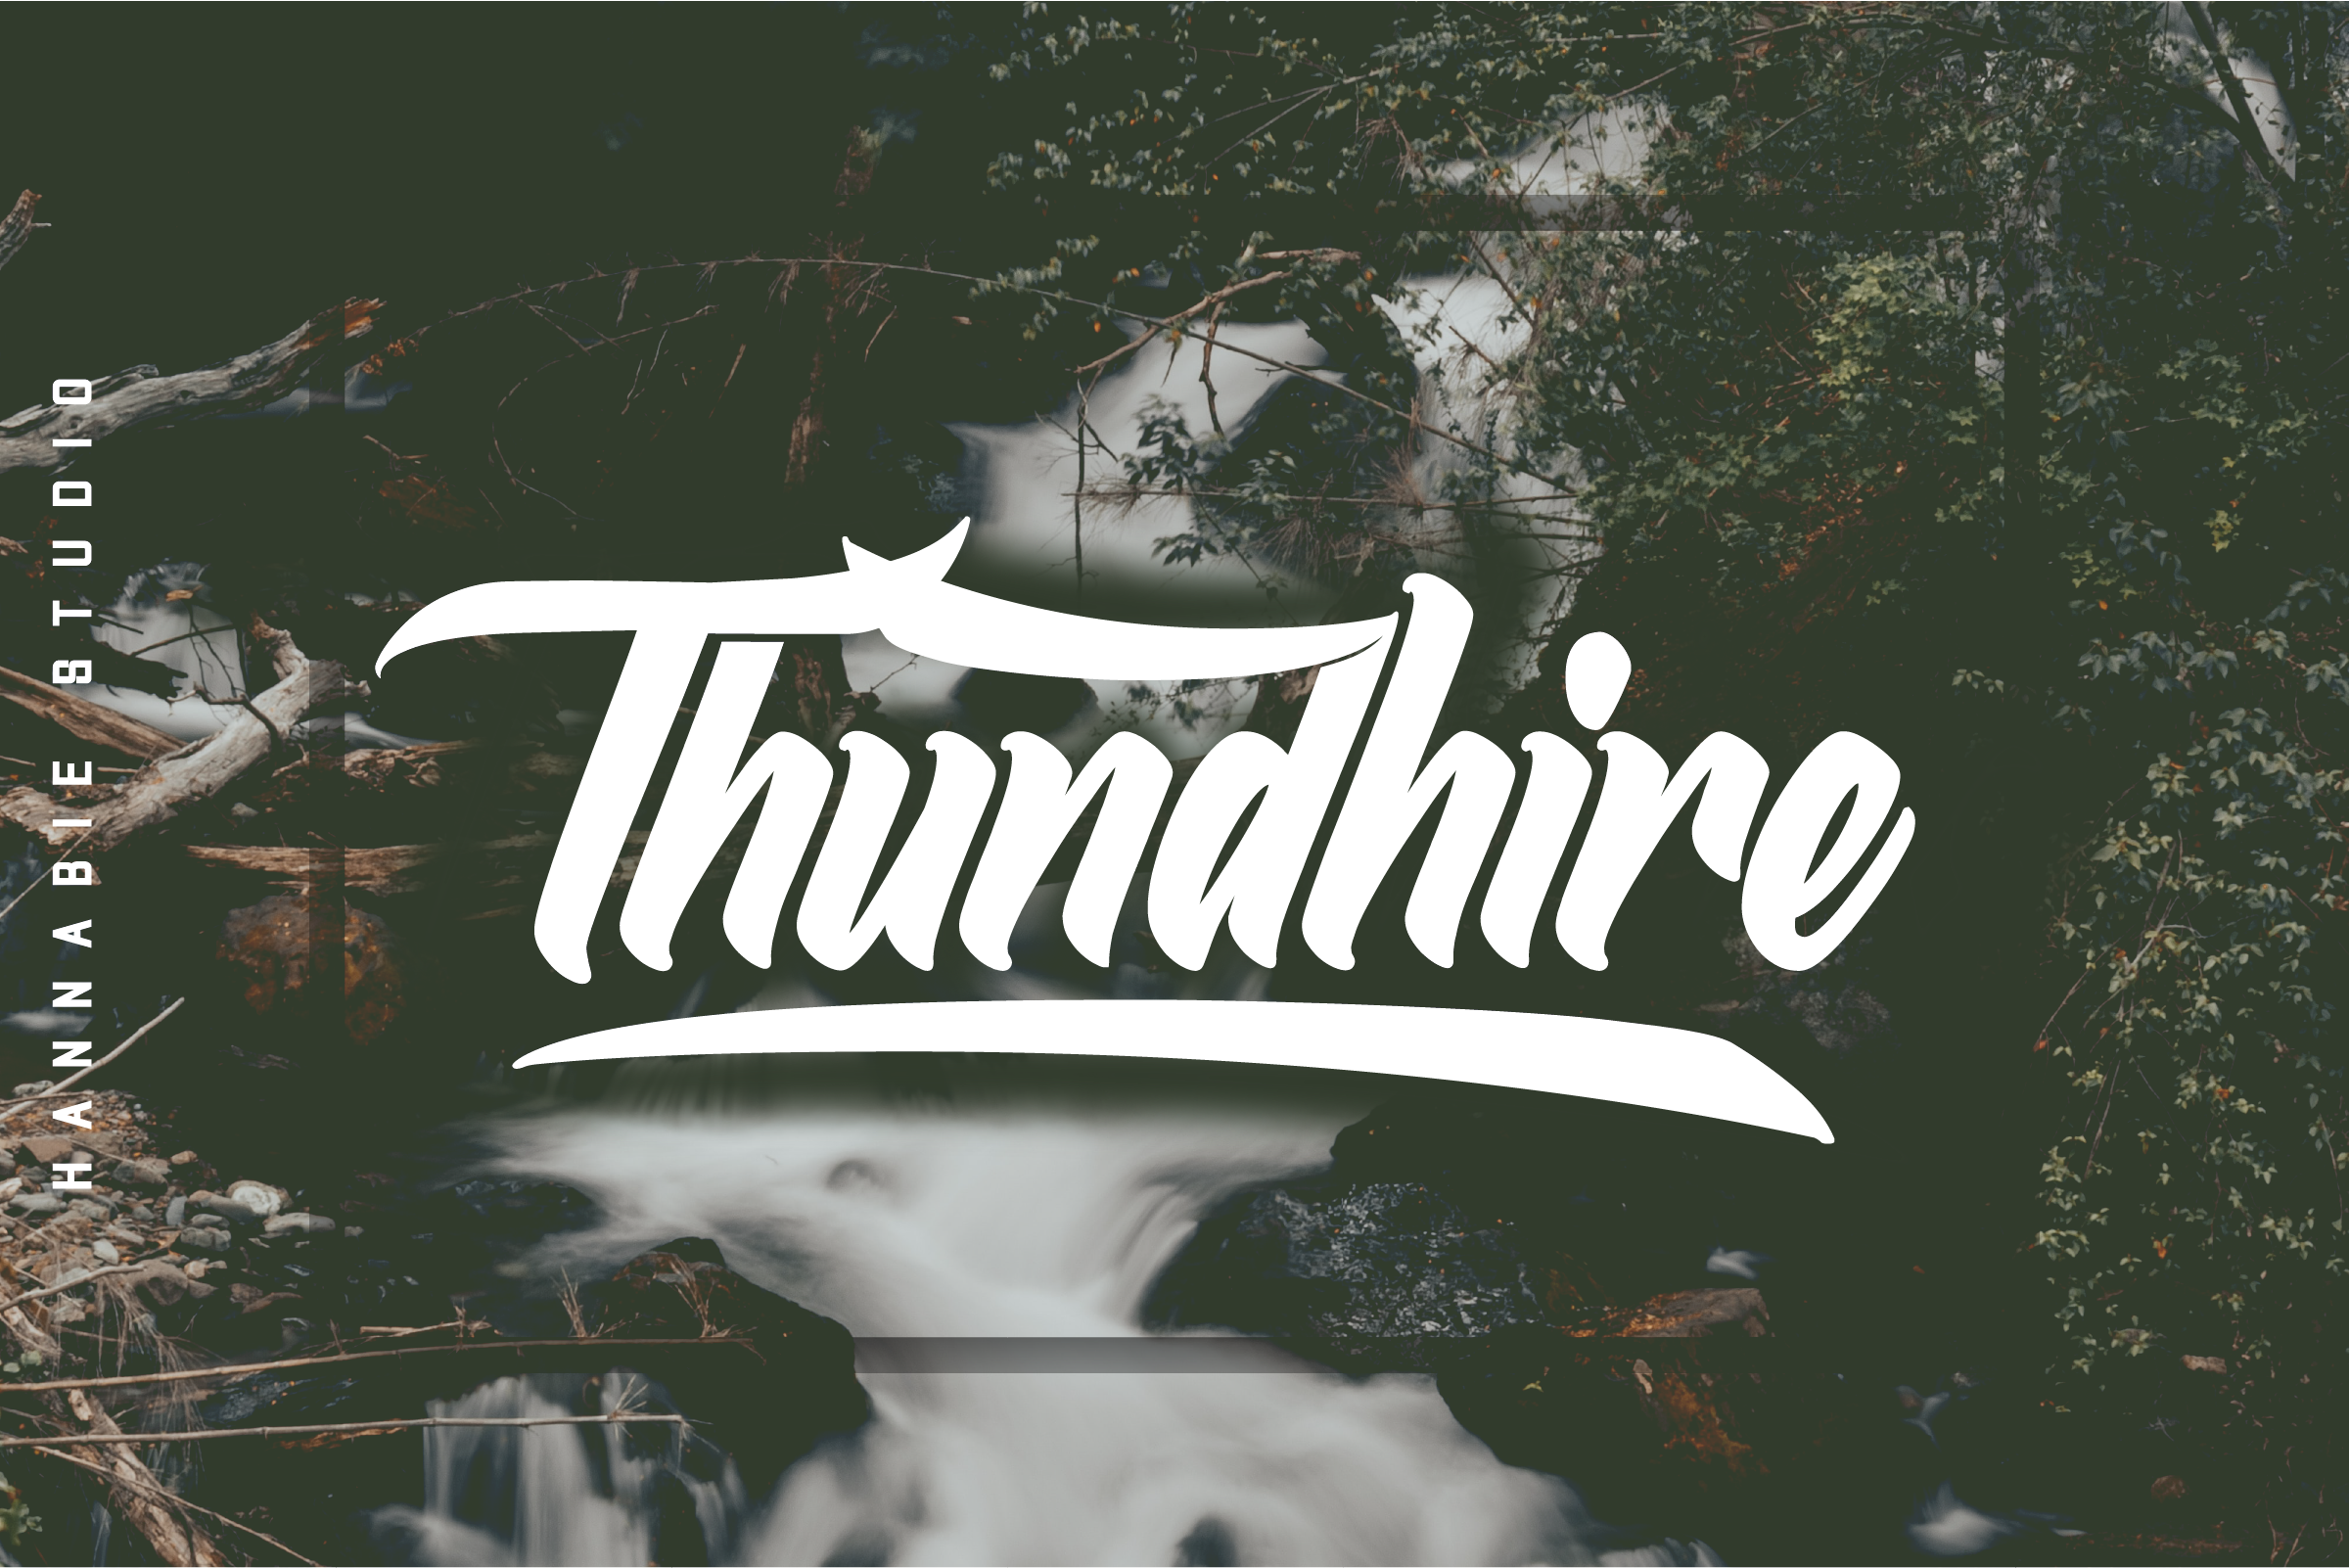 Thundhire Free Font